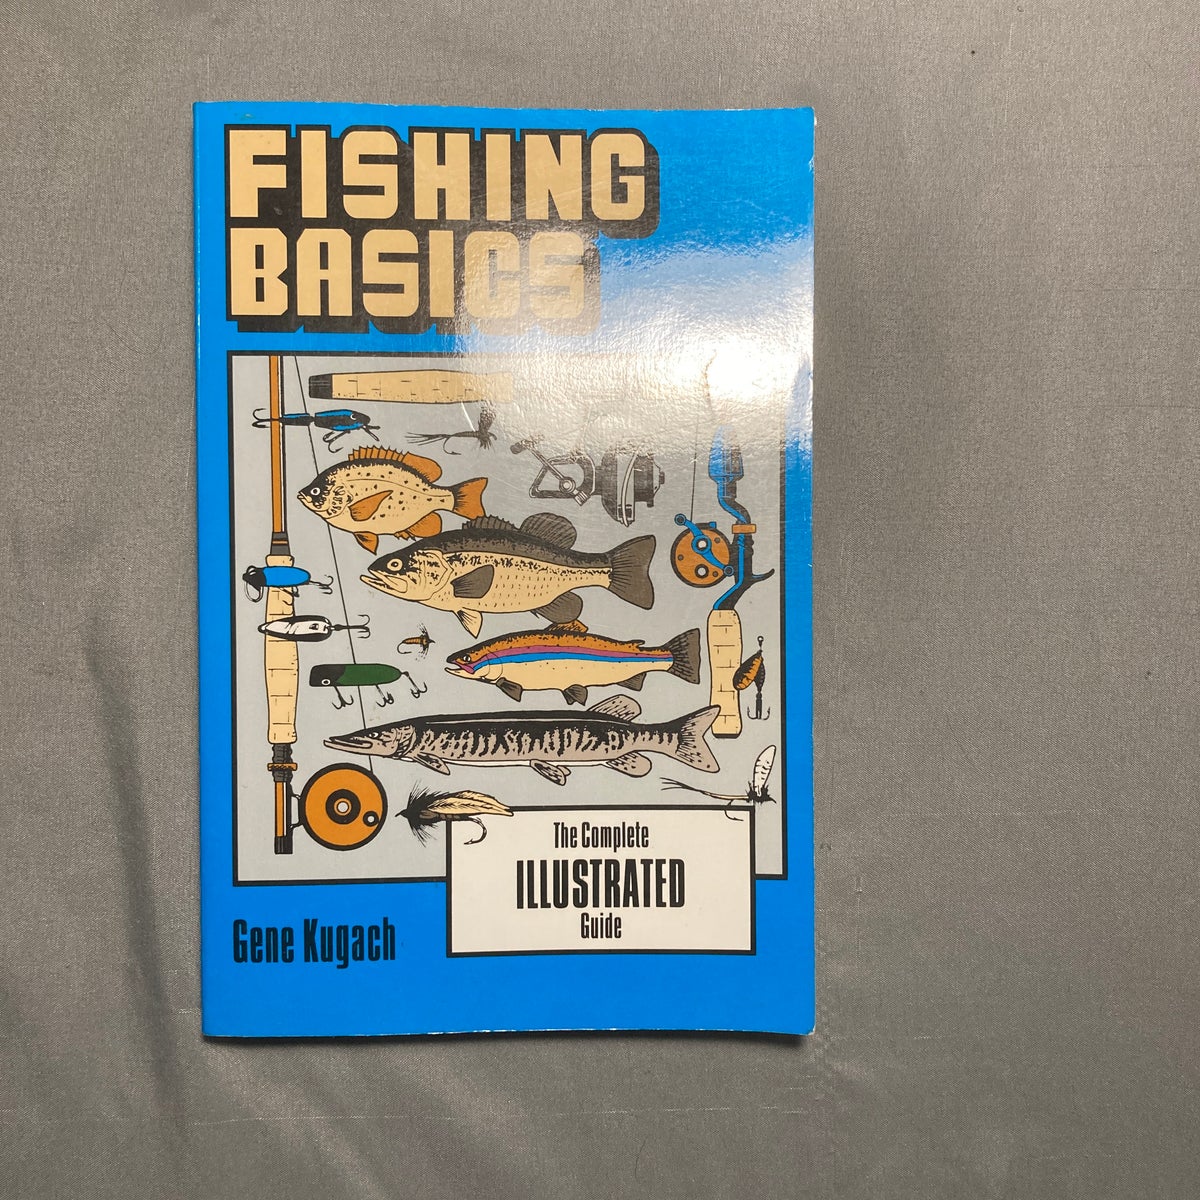 Fishing Basics by Gene Kugach, Paperback